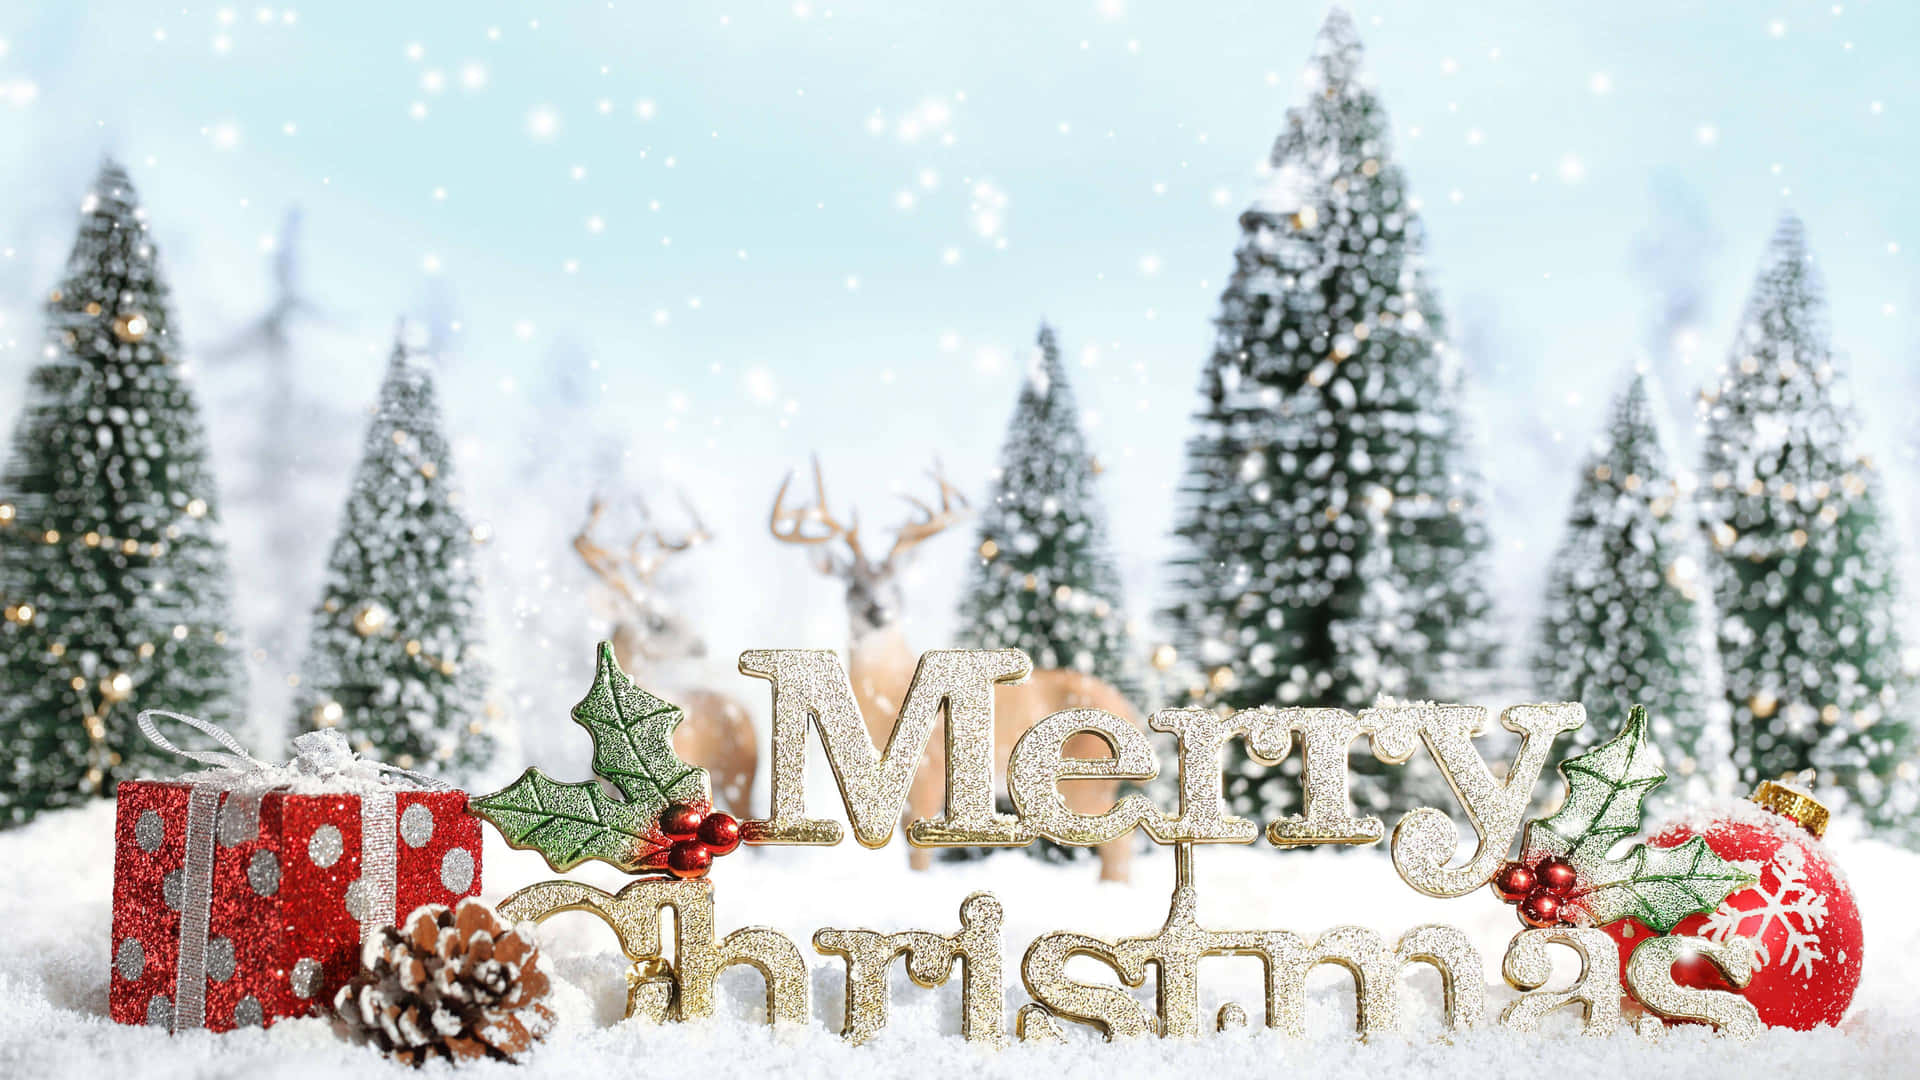 Cool Christmas Ornaments, Deer, Christmas Tree Background